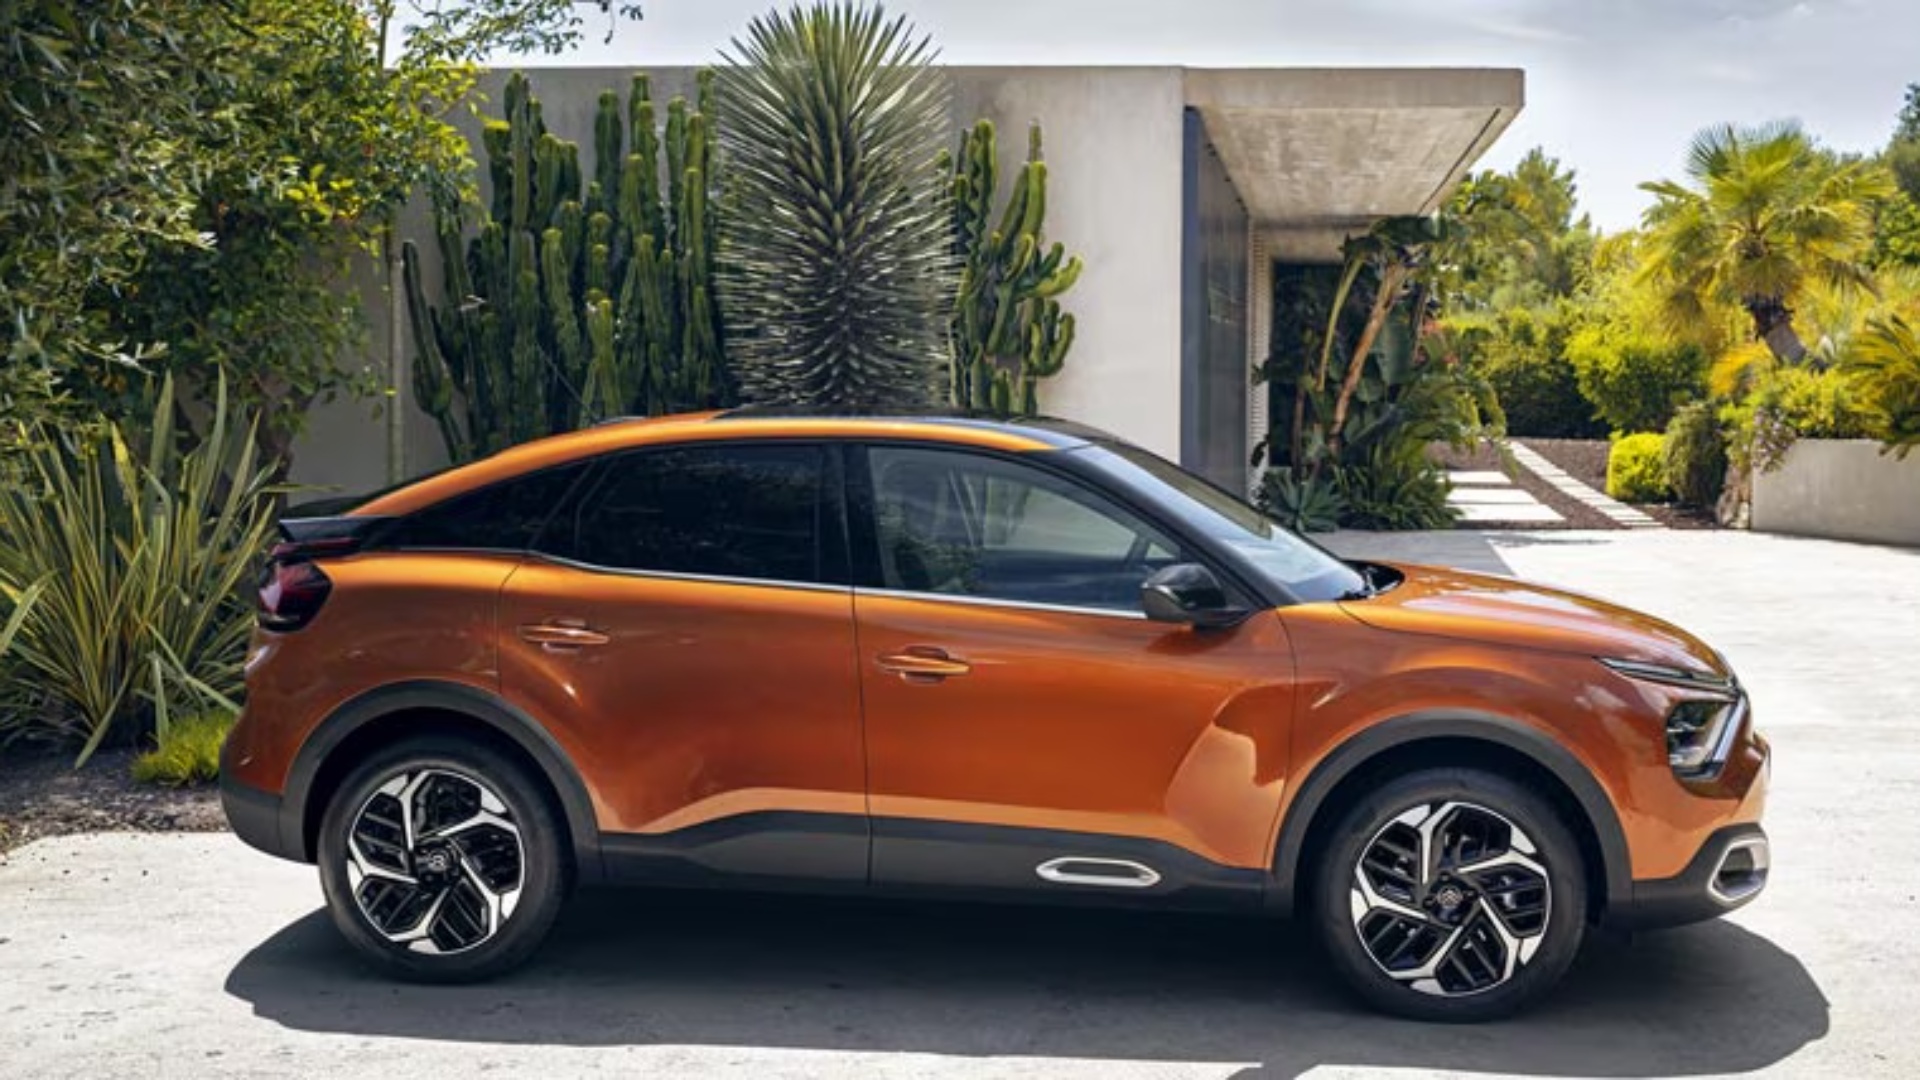 CITROËN C4/Citroën rishpik Hatchbackun Compact me 3 energji: 100% electric, naftë ose benzinë!